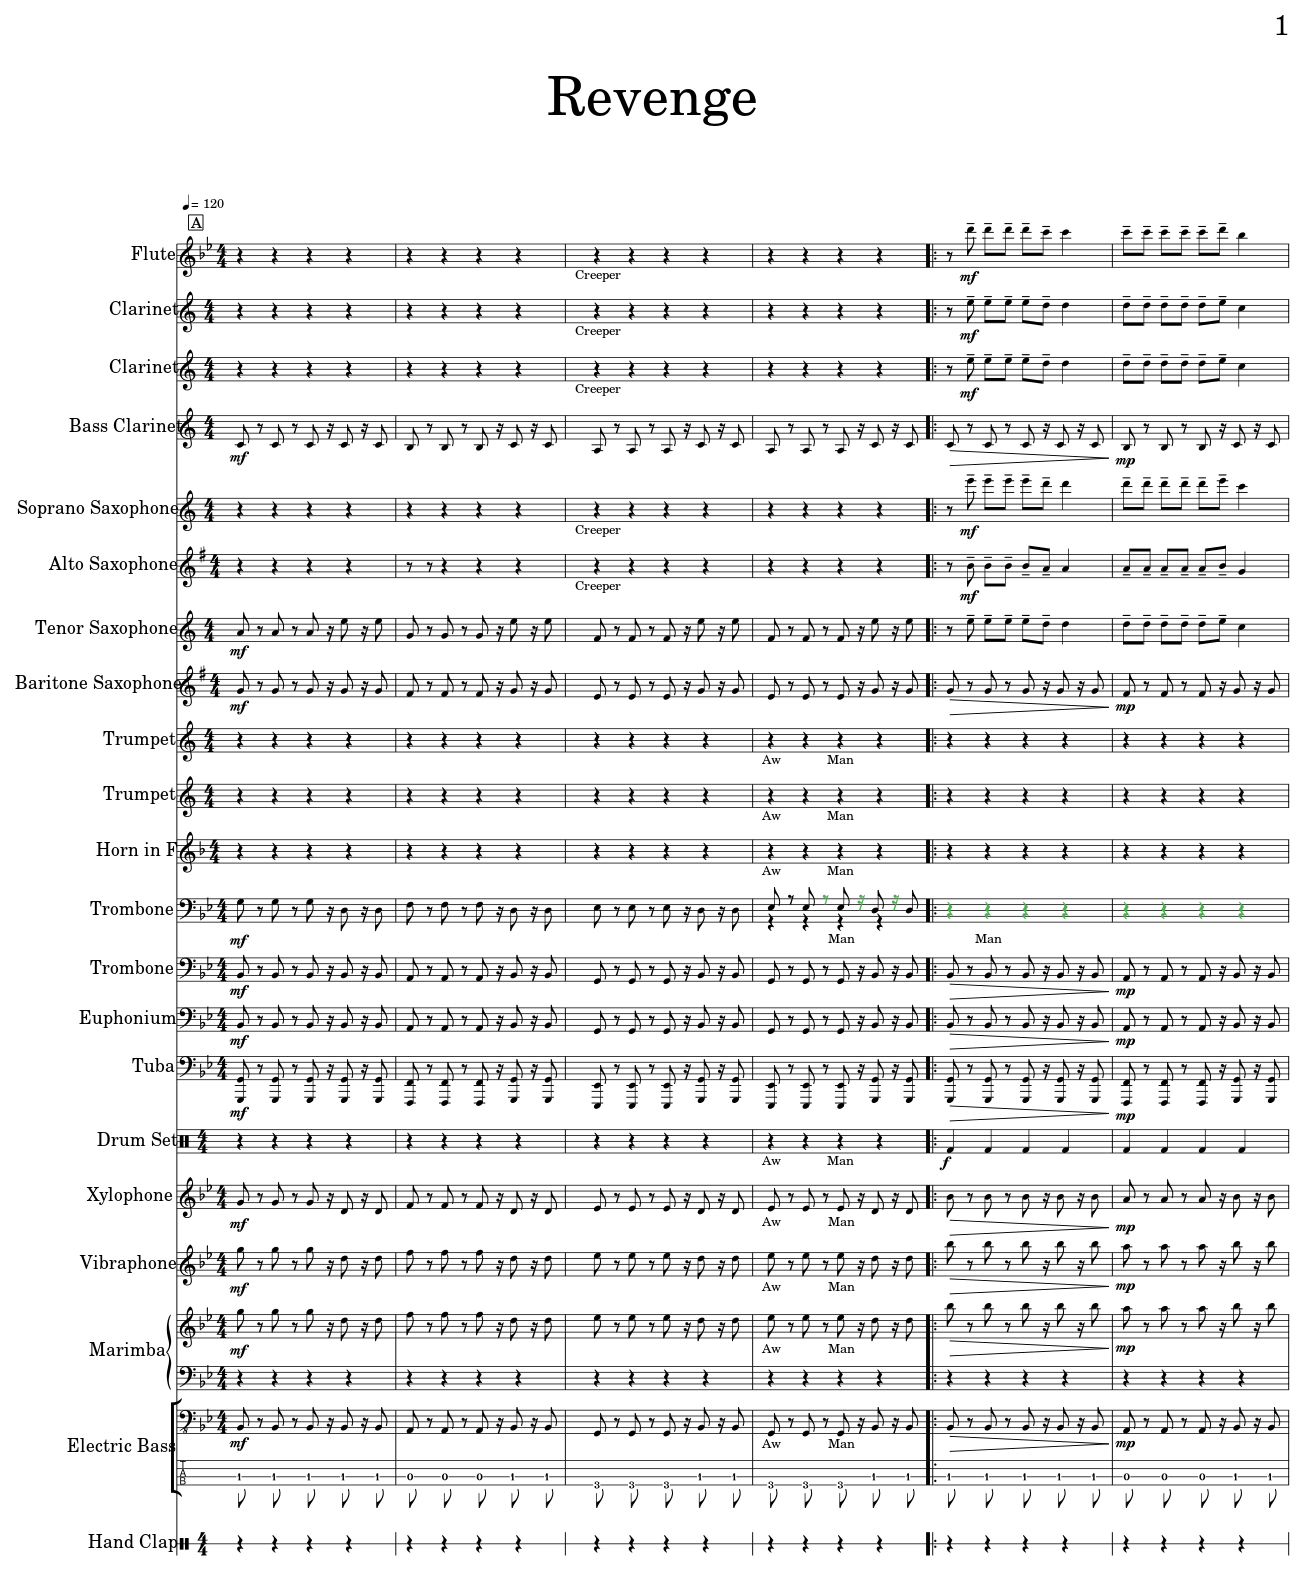 Revenge Sheet Music For Flute Clarinet Bass Clarinet Soprano Saxophone Alto Saxophone Tenor Saxophone Baritone Saxophone Trumpet Horn In F Trombone Euphonium Tuba Drum Set Xylophone Vibraphone Marimba Electric Bass Hand